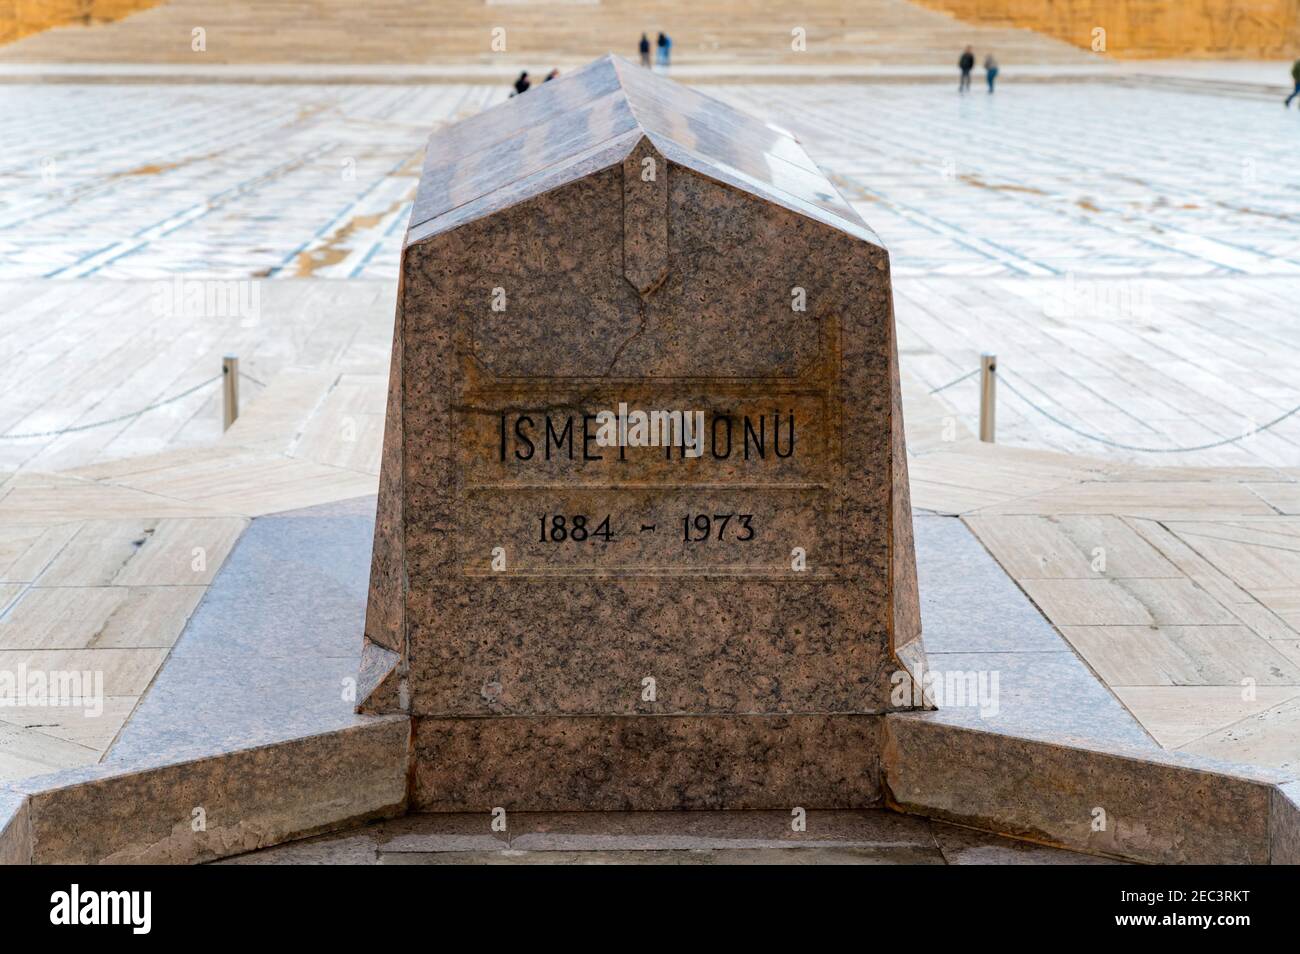 ANKARA, TURKEY - 14 DECEMBER 2020: monumental tomb of Ismet Inonu, the second president of the Republic of Turkey. Ismet Inonu's tomb faces the Mausol Stock Photo